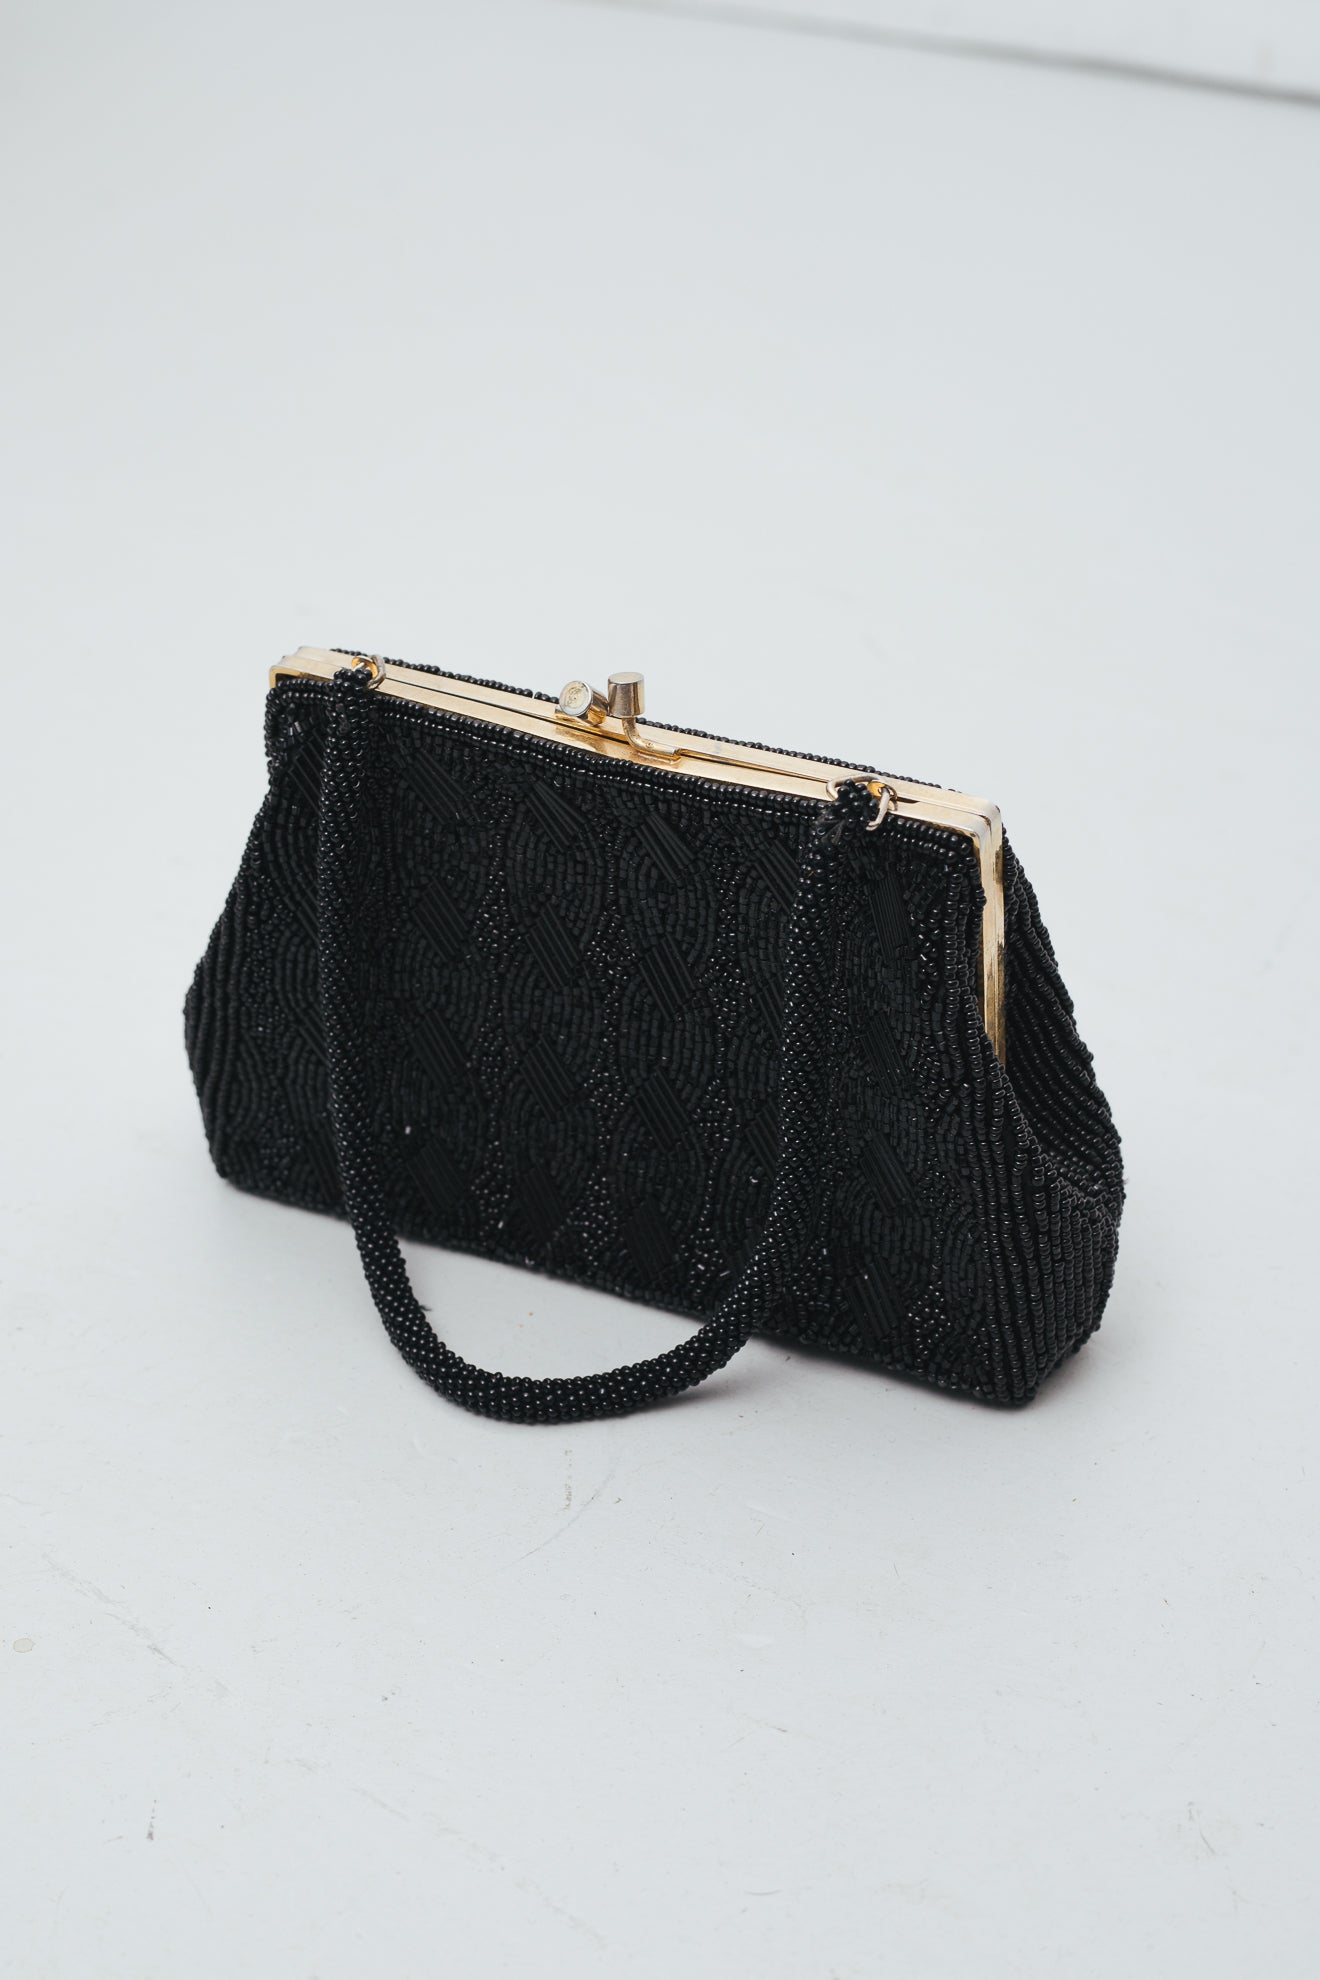 EXC Mary Kay Vintage Holiday Black Velvet Clutch Purse W/ Chain Strap 12x5  | eBay